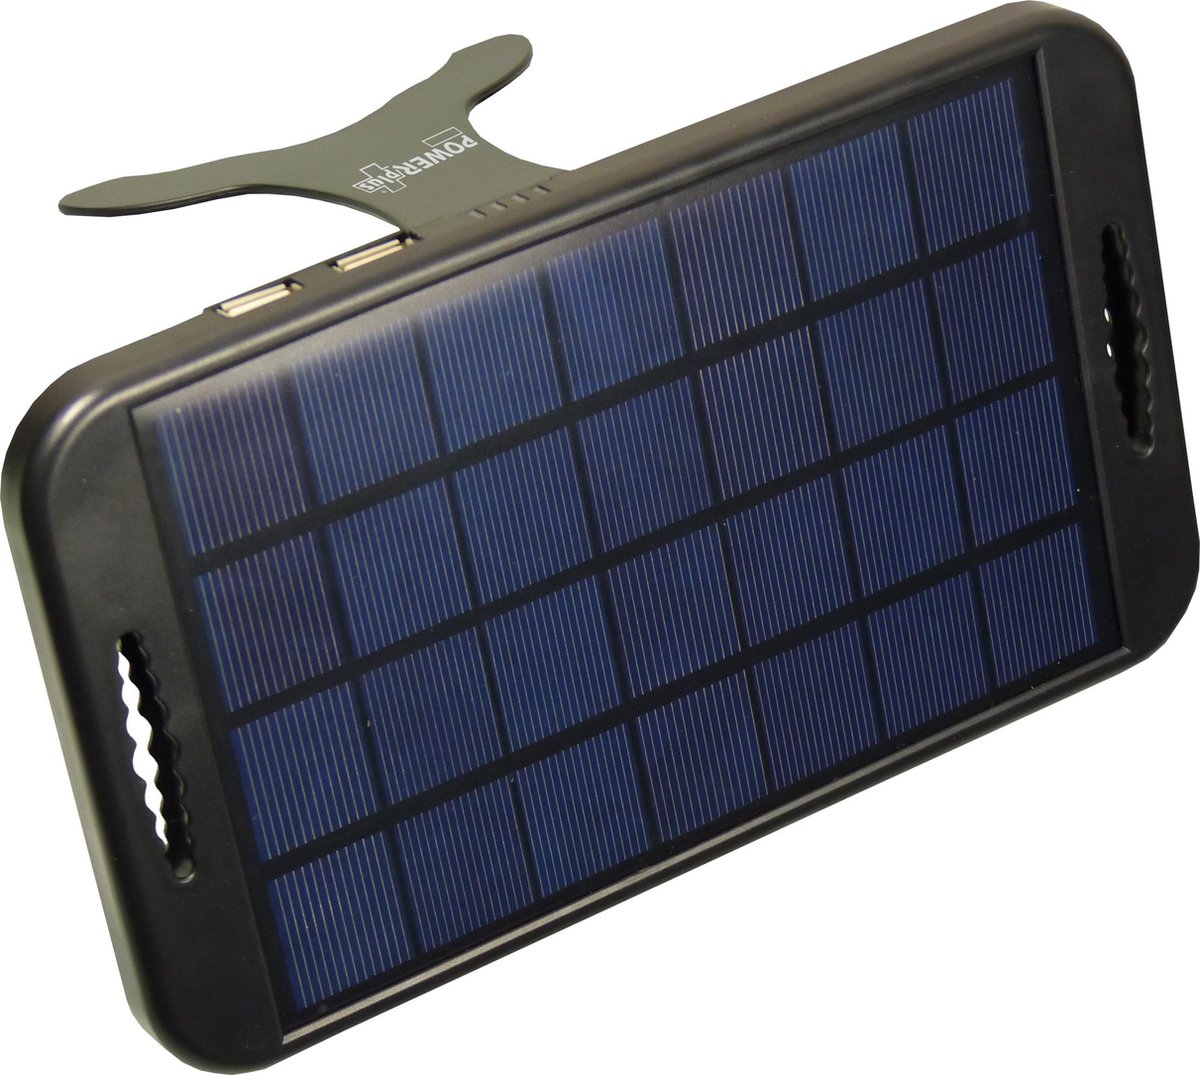 POWERplus Camel Zonnelader voor powerbanks en mobiele telefoons | Alleen zonne-lader / geen batterij (geen powerbank) | 3W zonnecel / 2W max. opbrengst | opladen door middel van zonne-energie